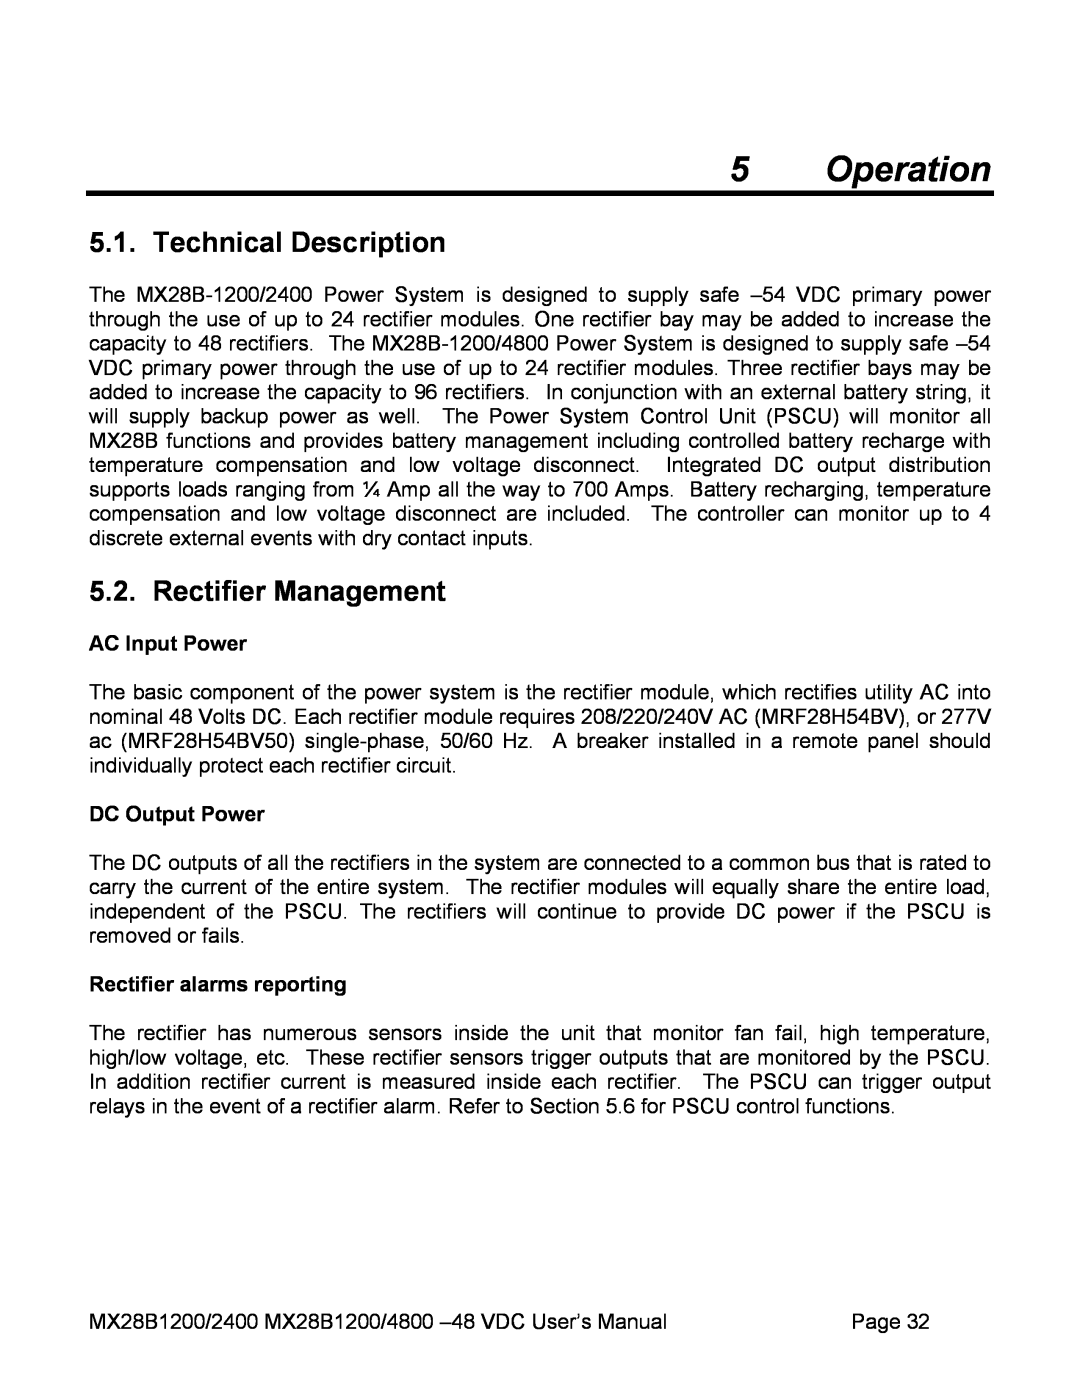 American Power Conversion MX28B2400, MX28B4800 manual Operation, Technical Description, Rectifier Management, AC Input Power 